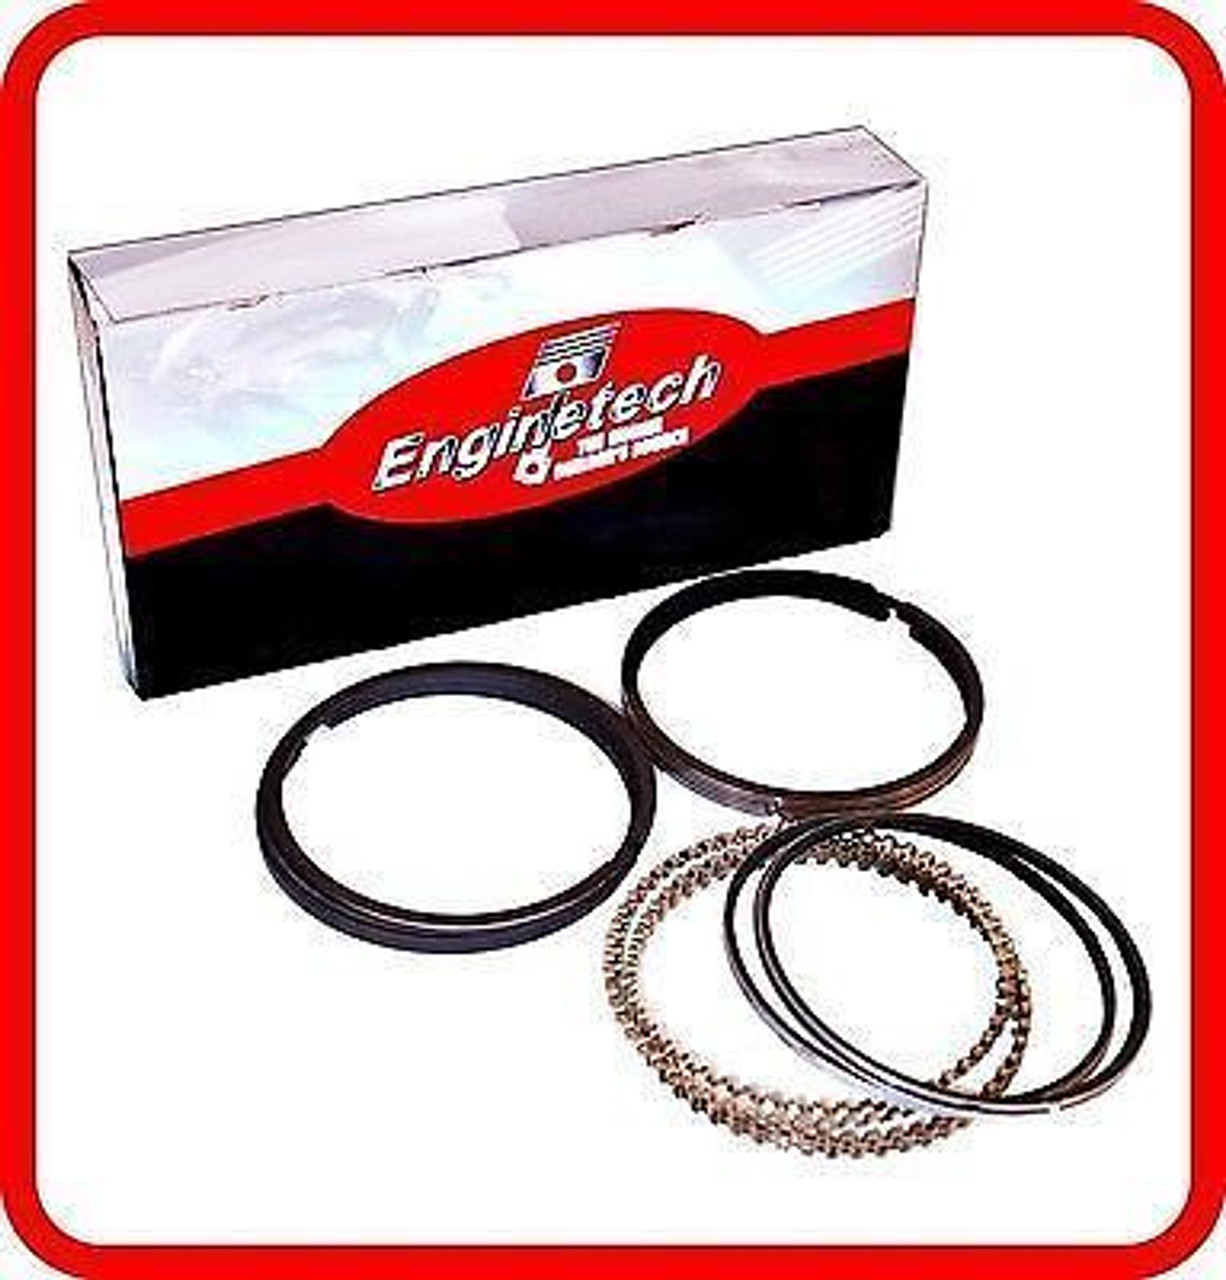 Engine Piston Ring Set - Kit Part - S95116